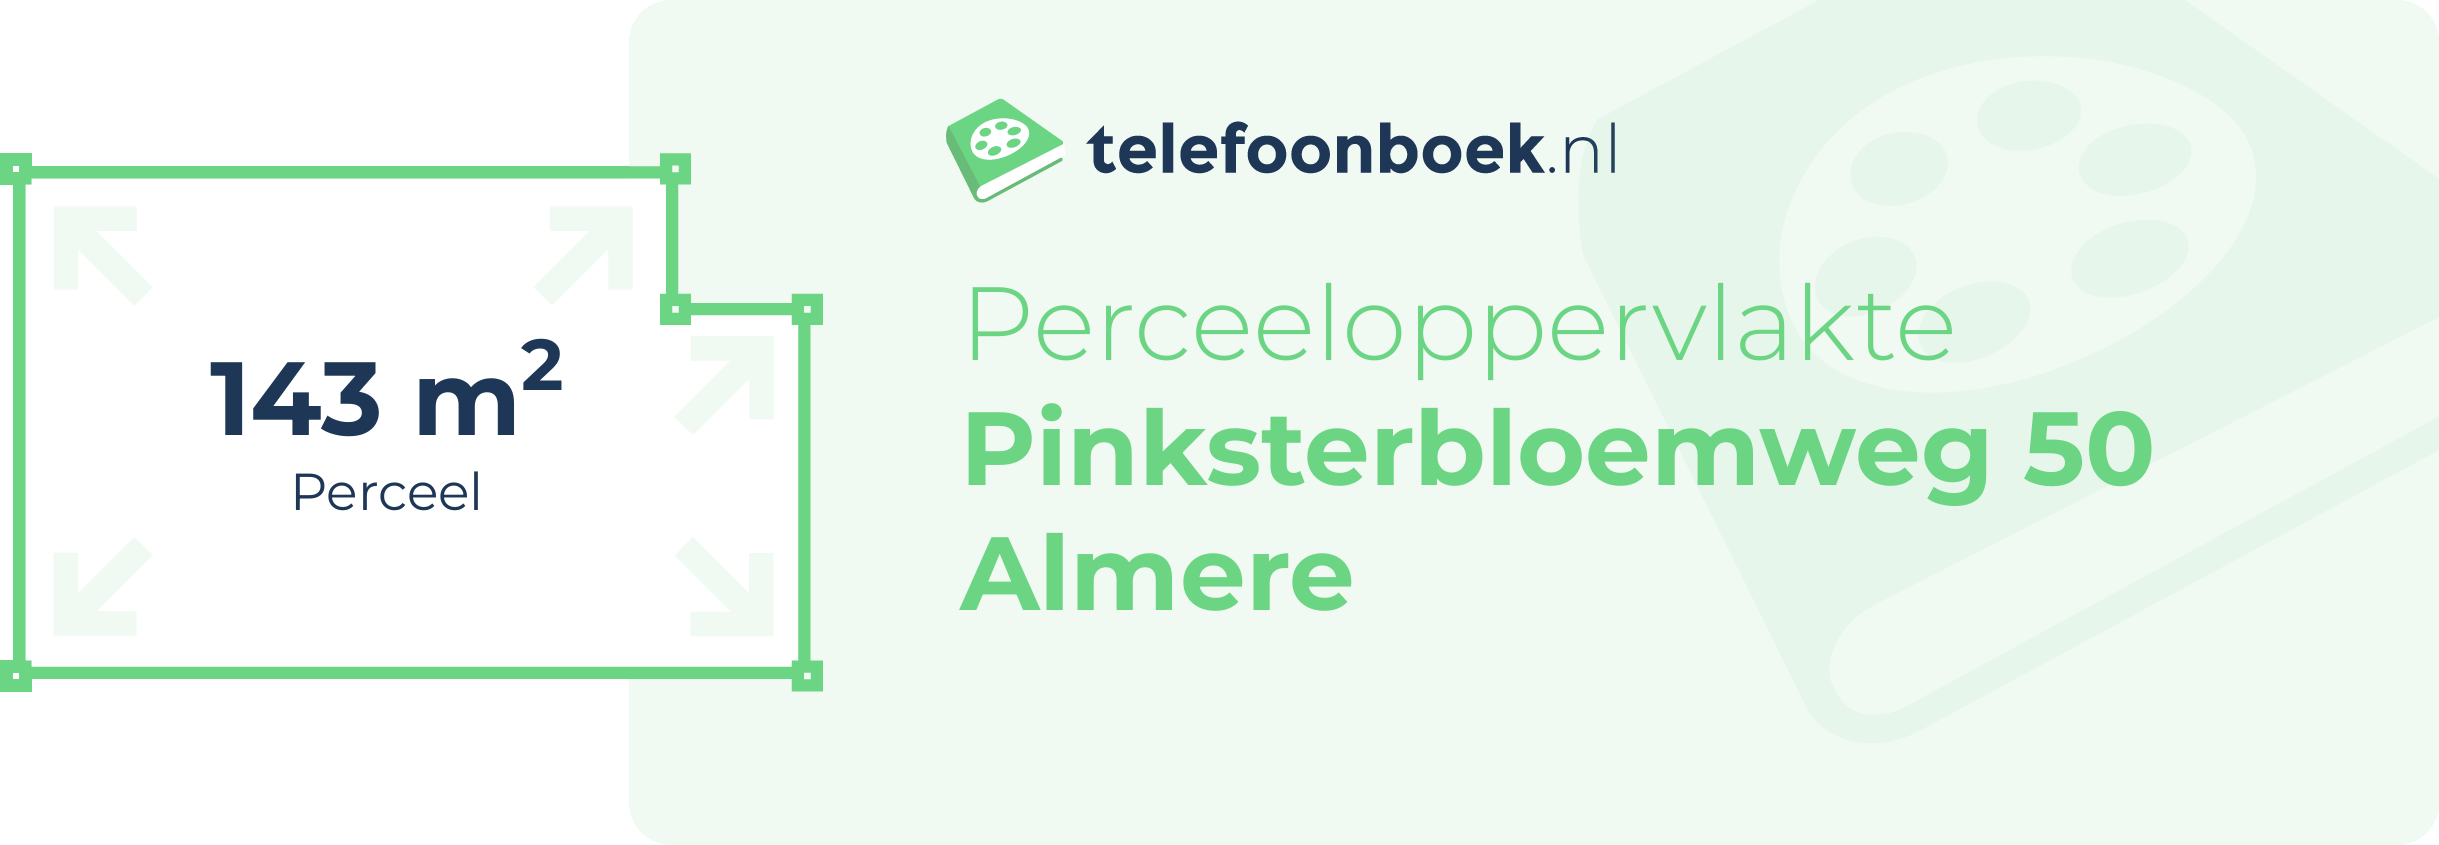 Perceeloppervlakte Pinksterbloemweg 50 Almere